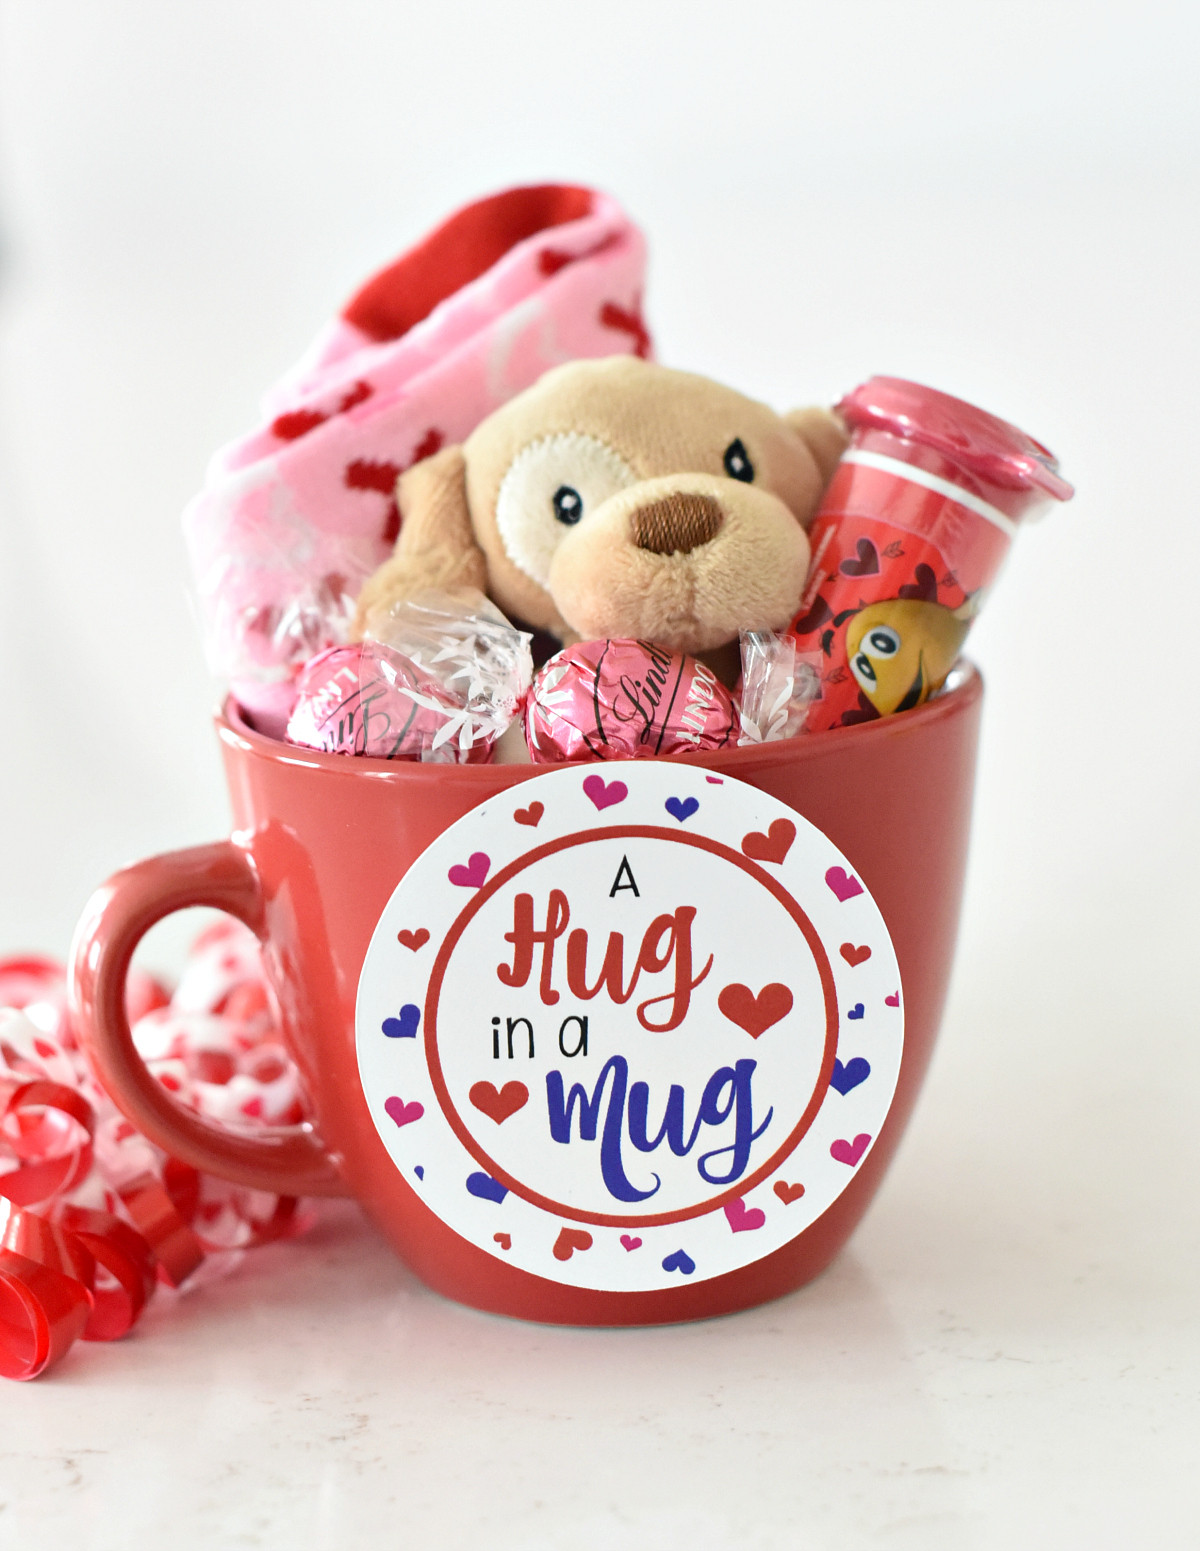 Valentine Gag Gift Ideas
 Fun Valentines Gift Idea for Kids – Fun Squared